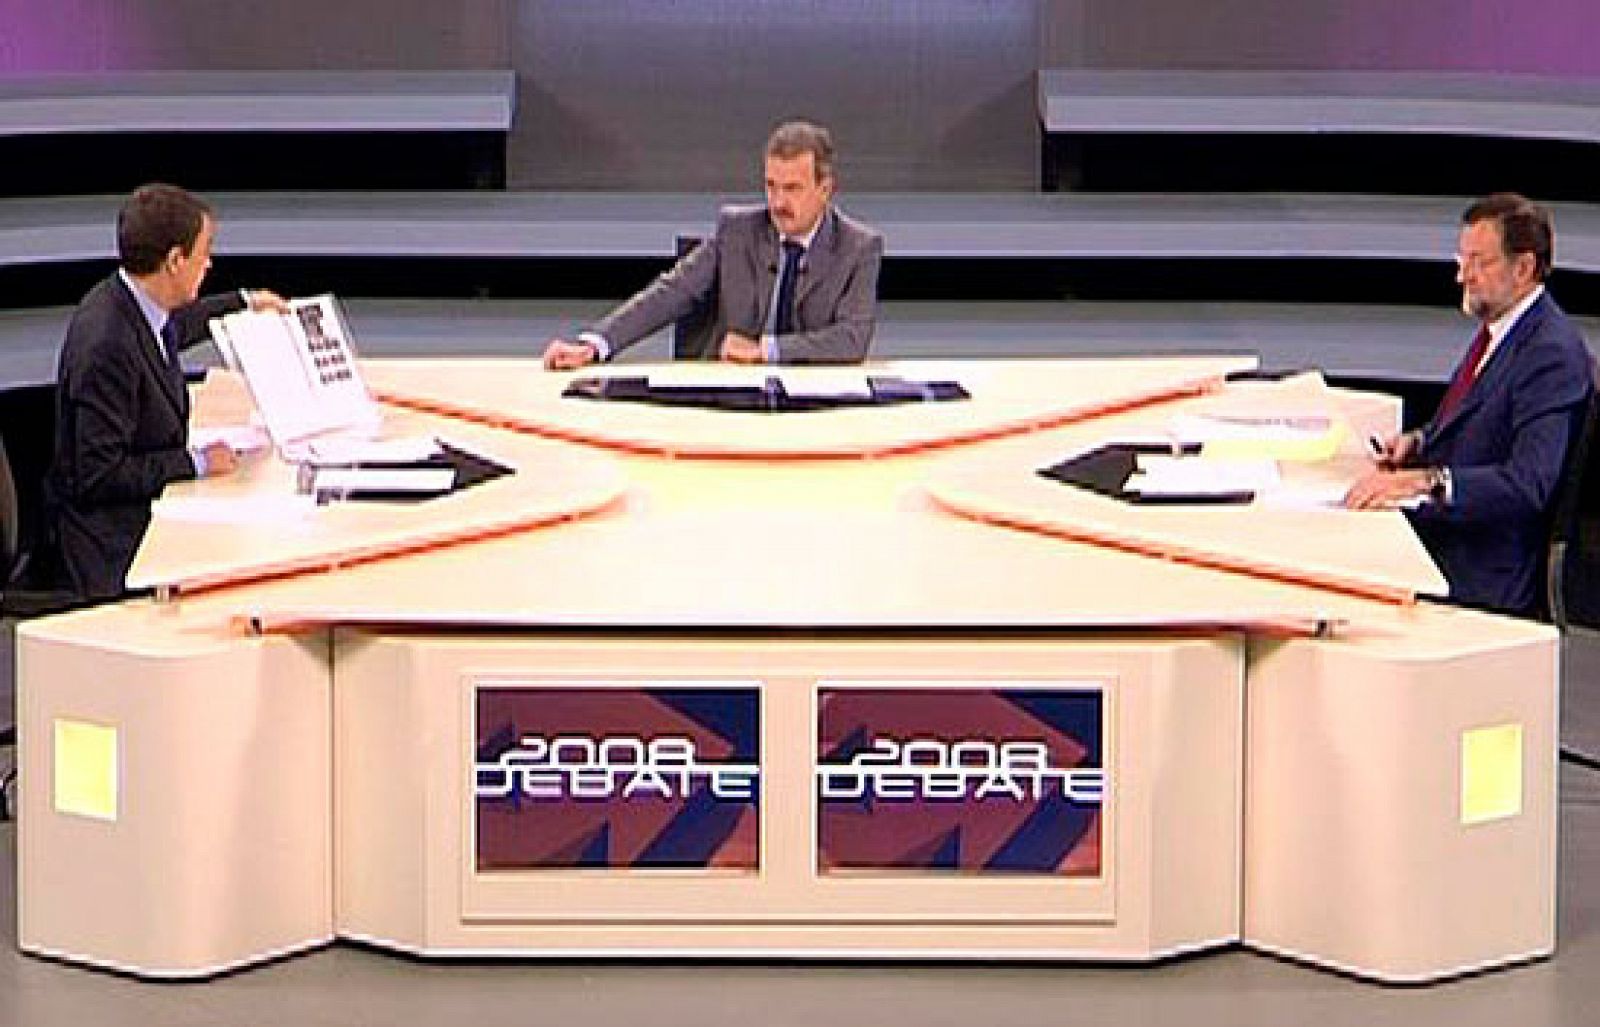 2008 - Zapatero y Rajoy se enfrentan cara a cara